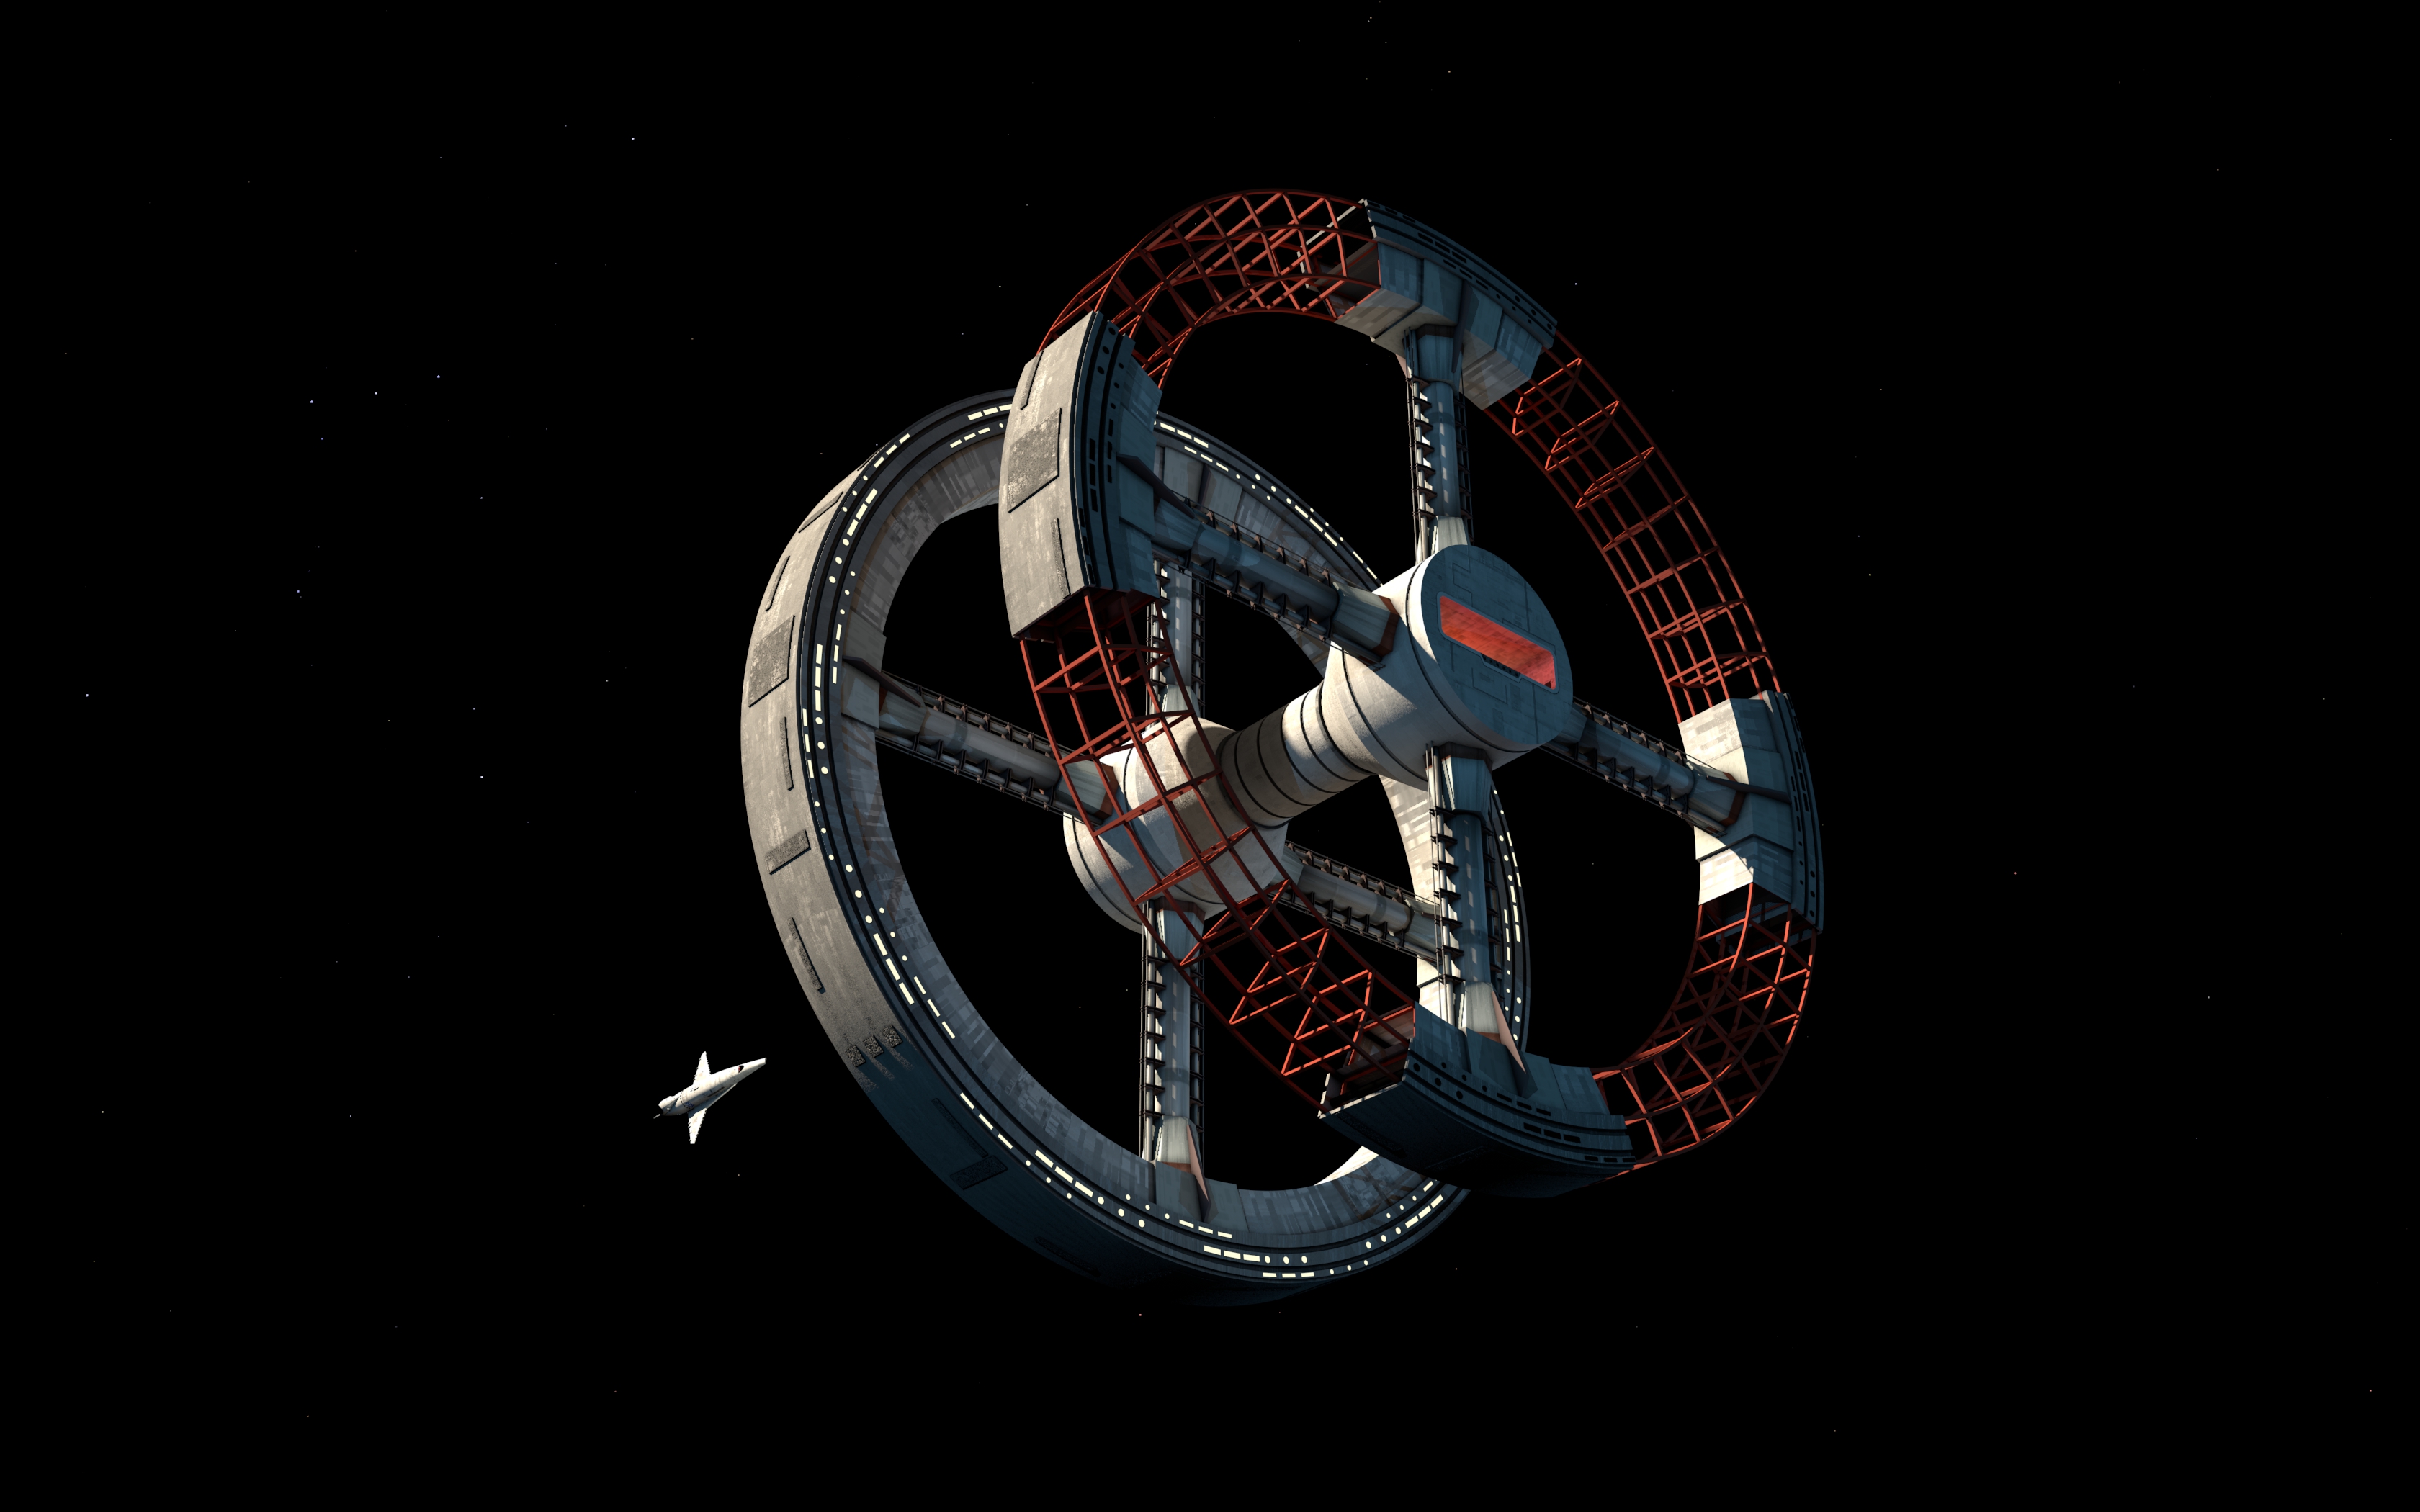 2001: A Space Odyssey by markAscott on DeviantArt